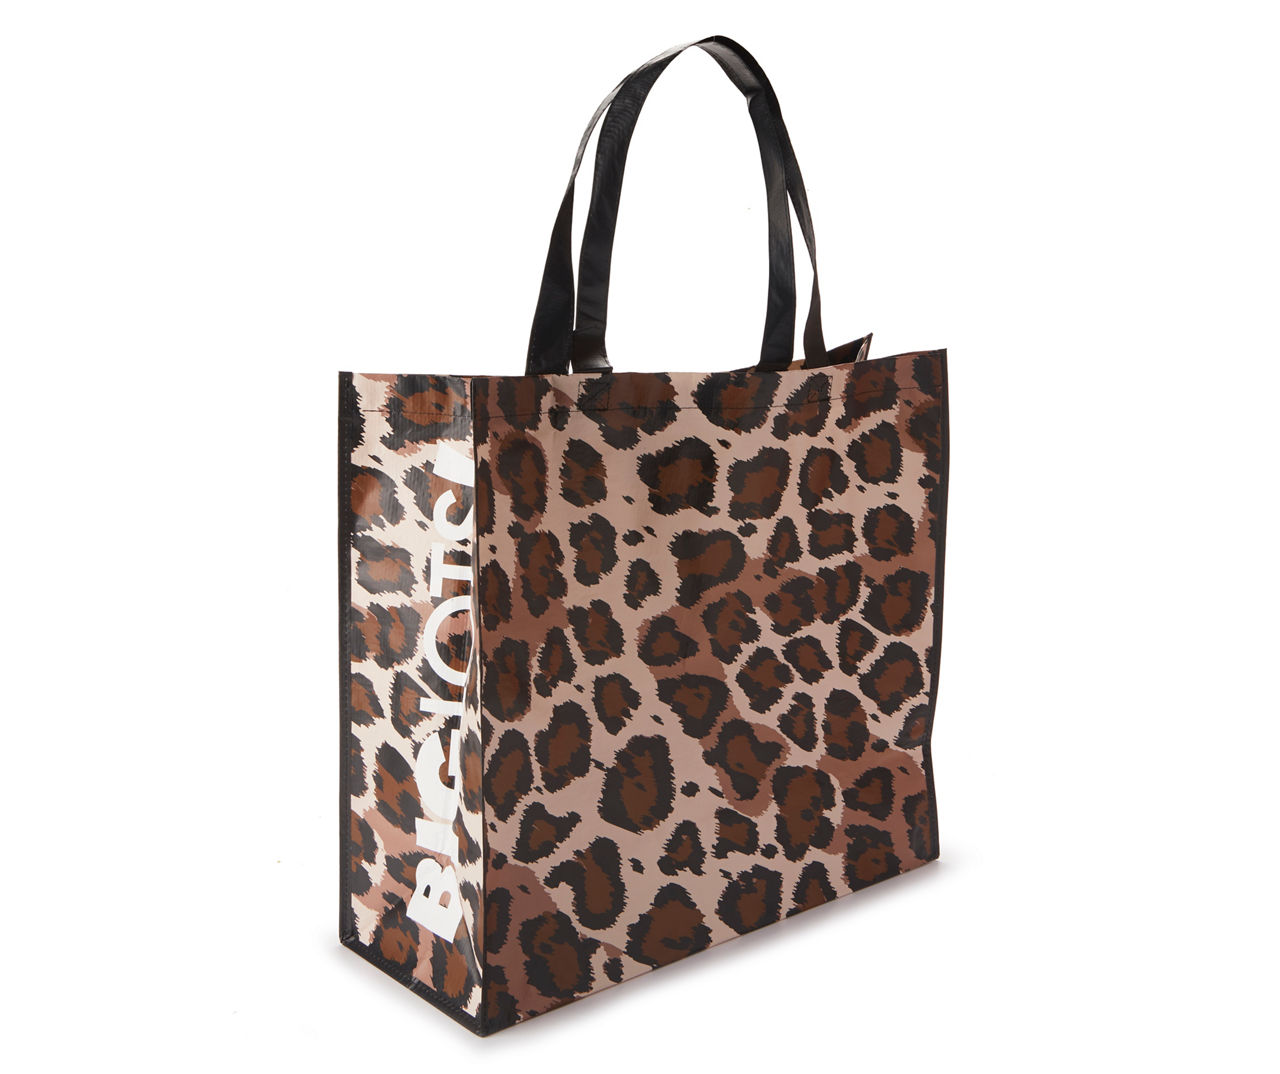 Black Leopard Print Tote Bag